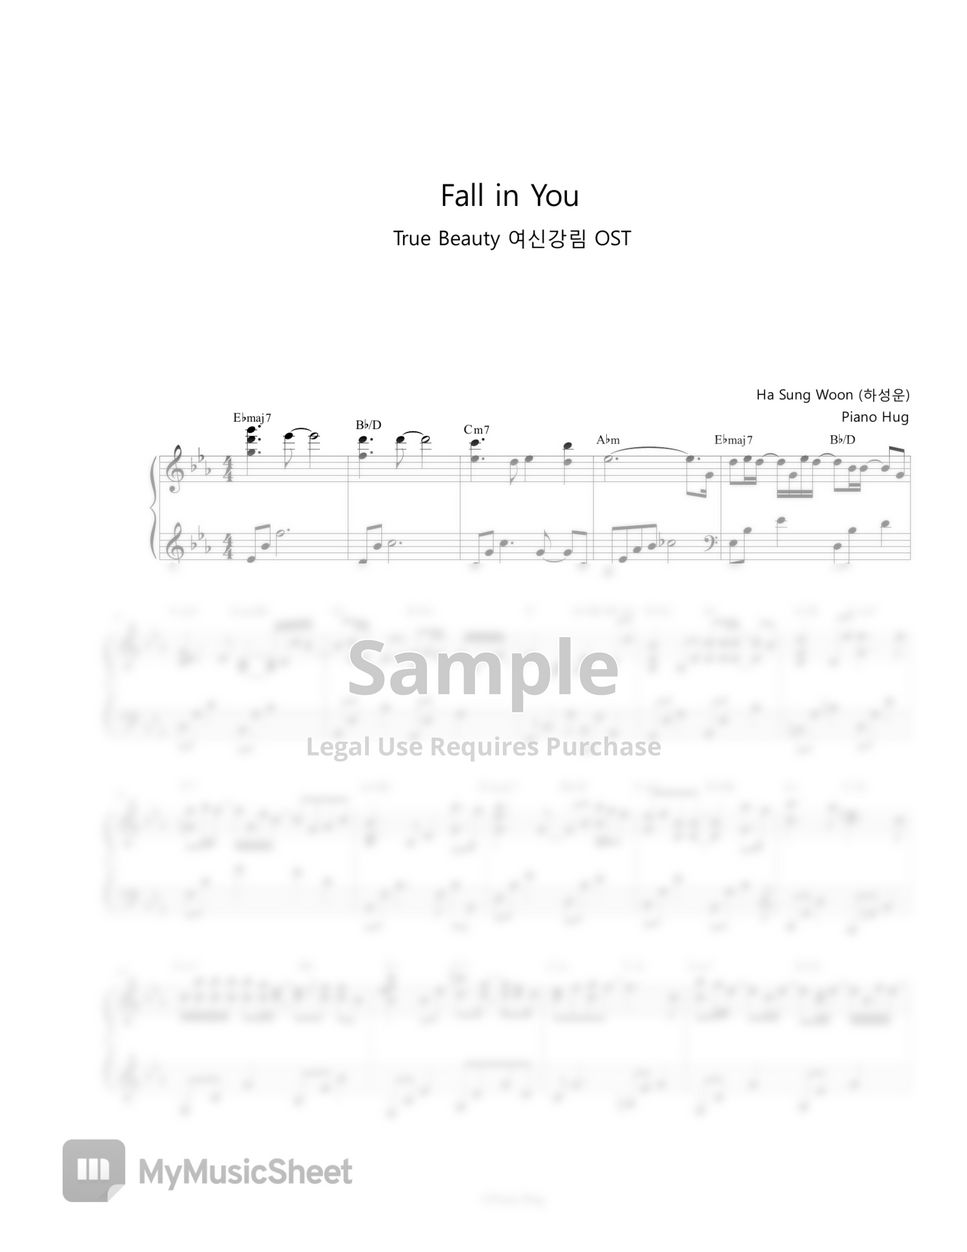 Ha Sung Woon (하성운) - Fall in You (True Beauty OST) by Piano Hug